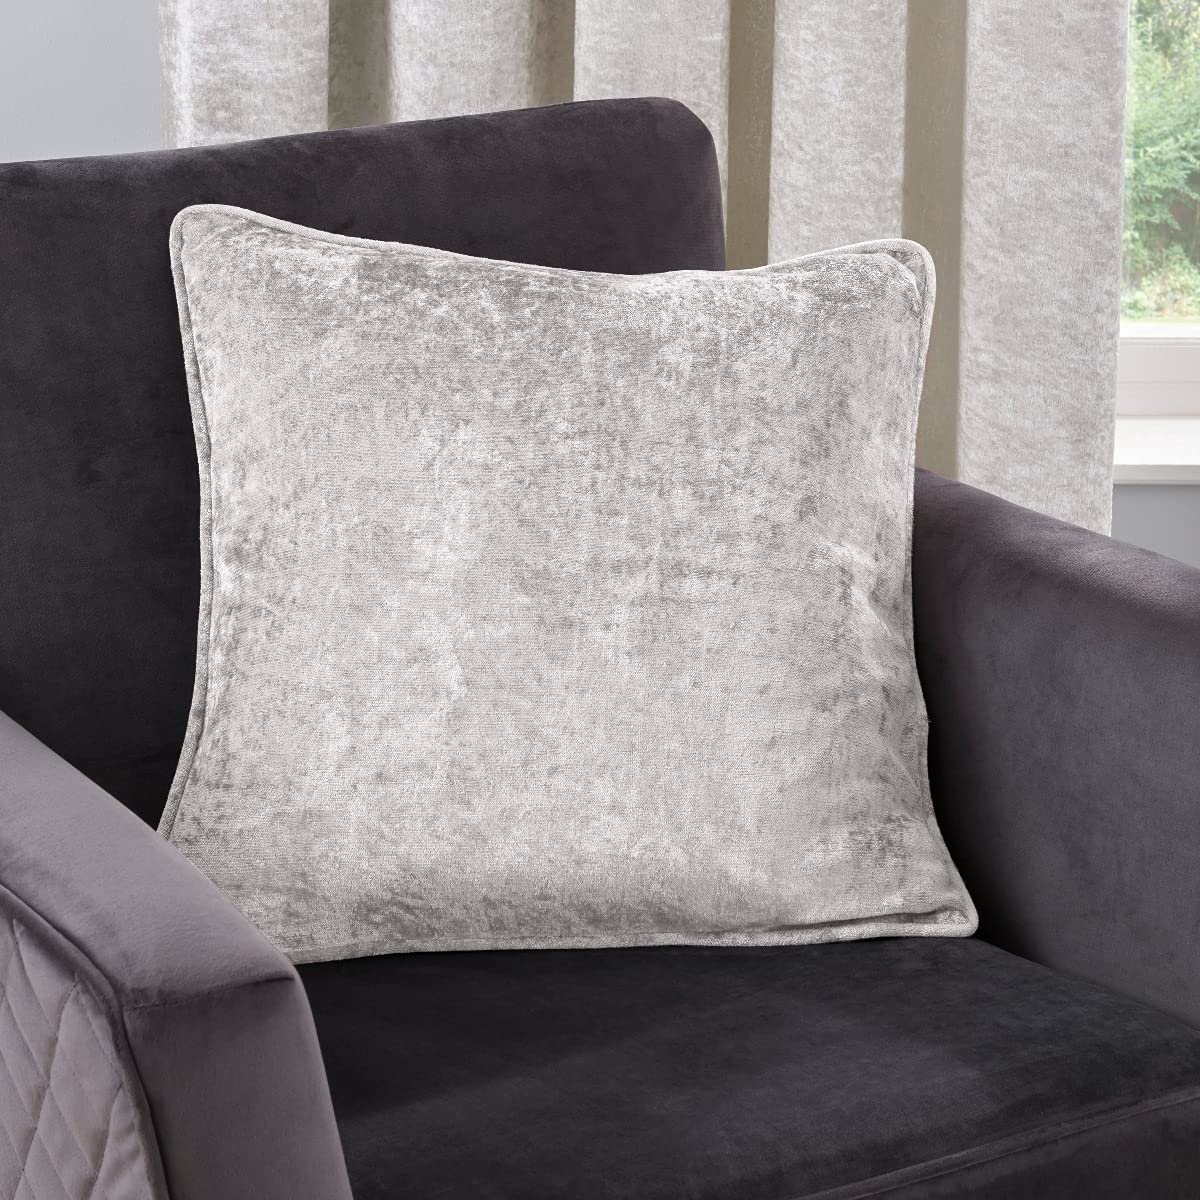 Crushed Velvet - Filled Cushion